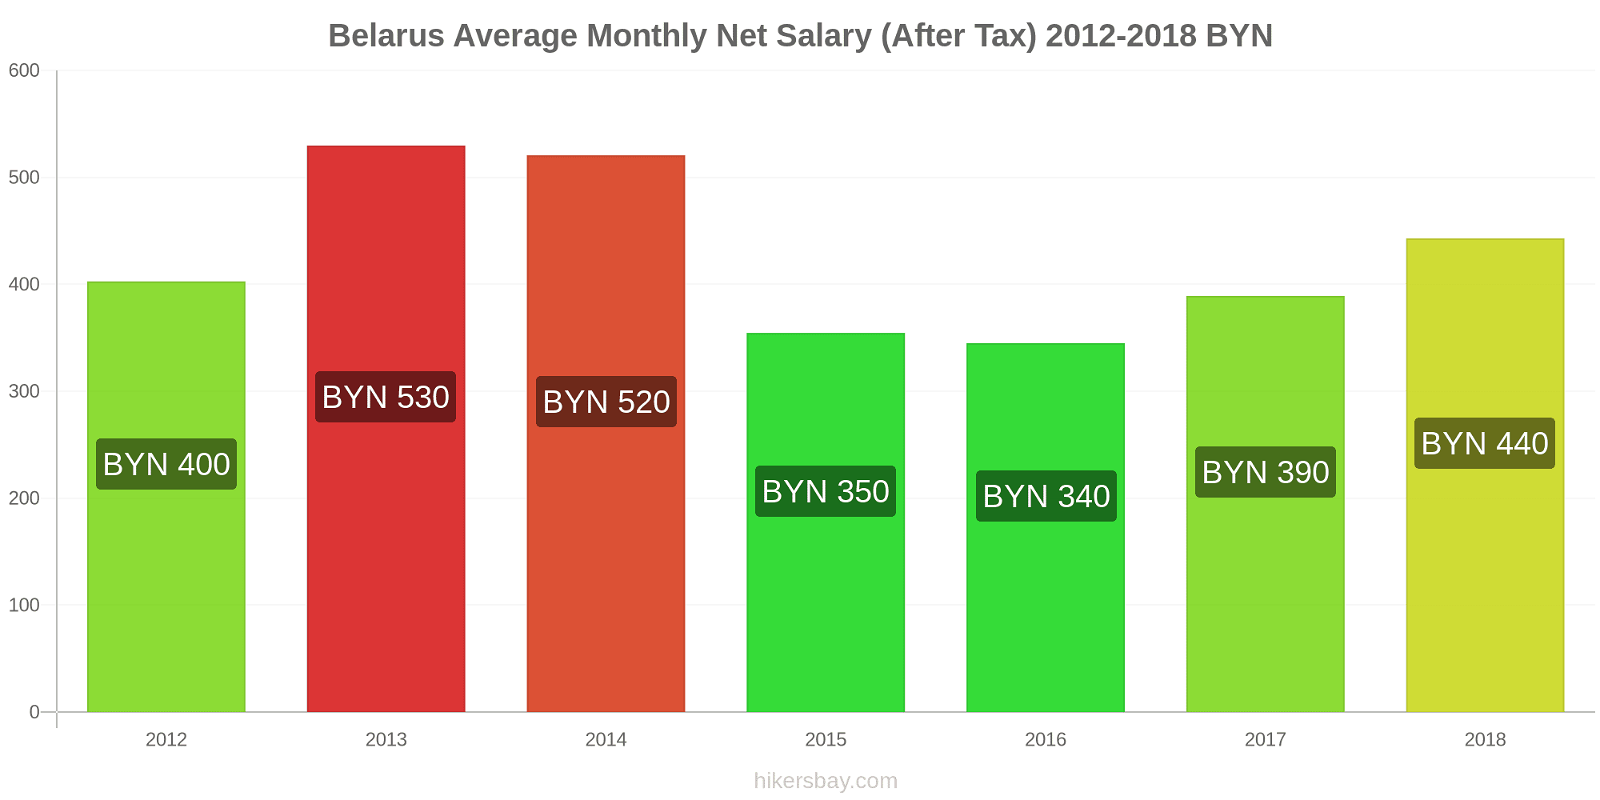 Belarus price changes Average Monthly Net Salary (After Tax) hikersbay.com